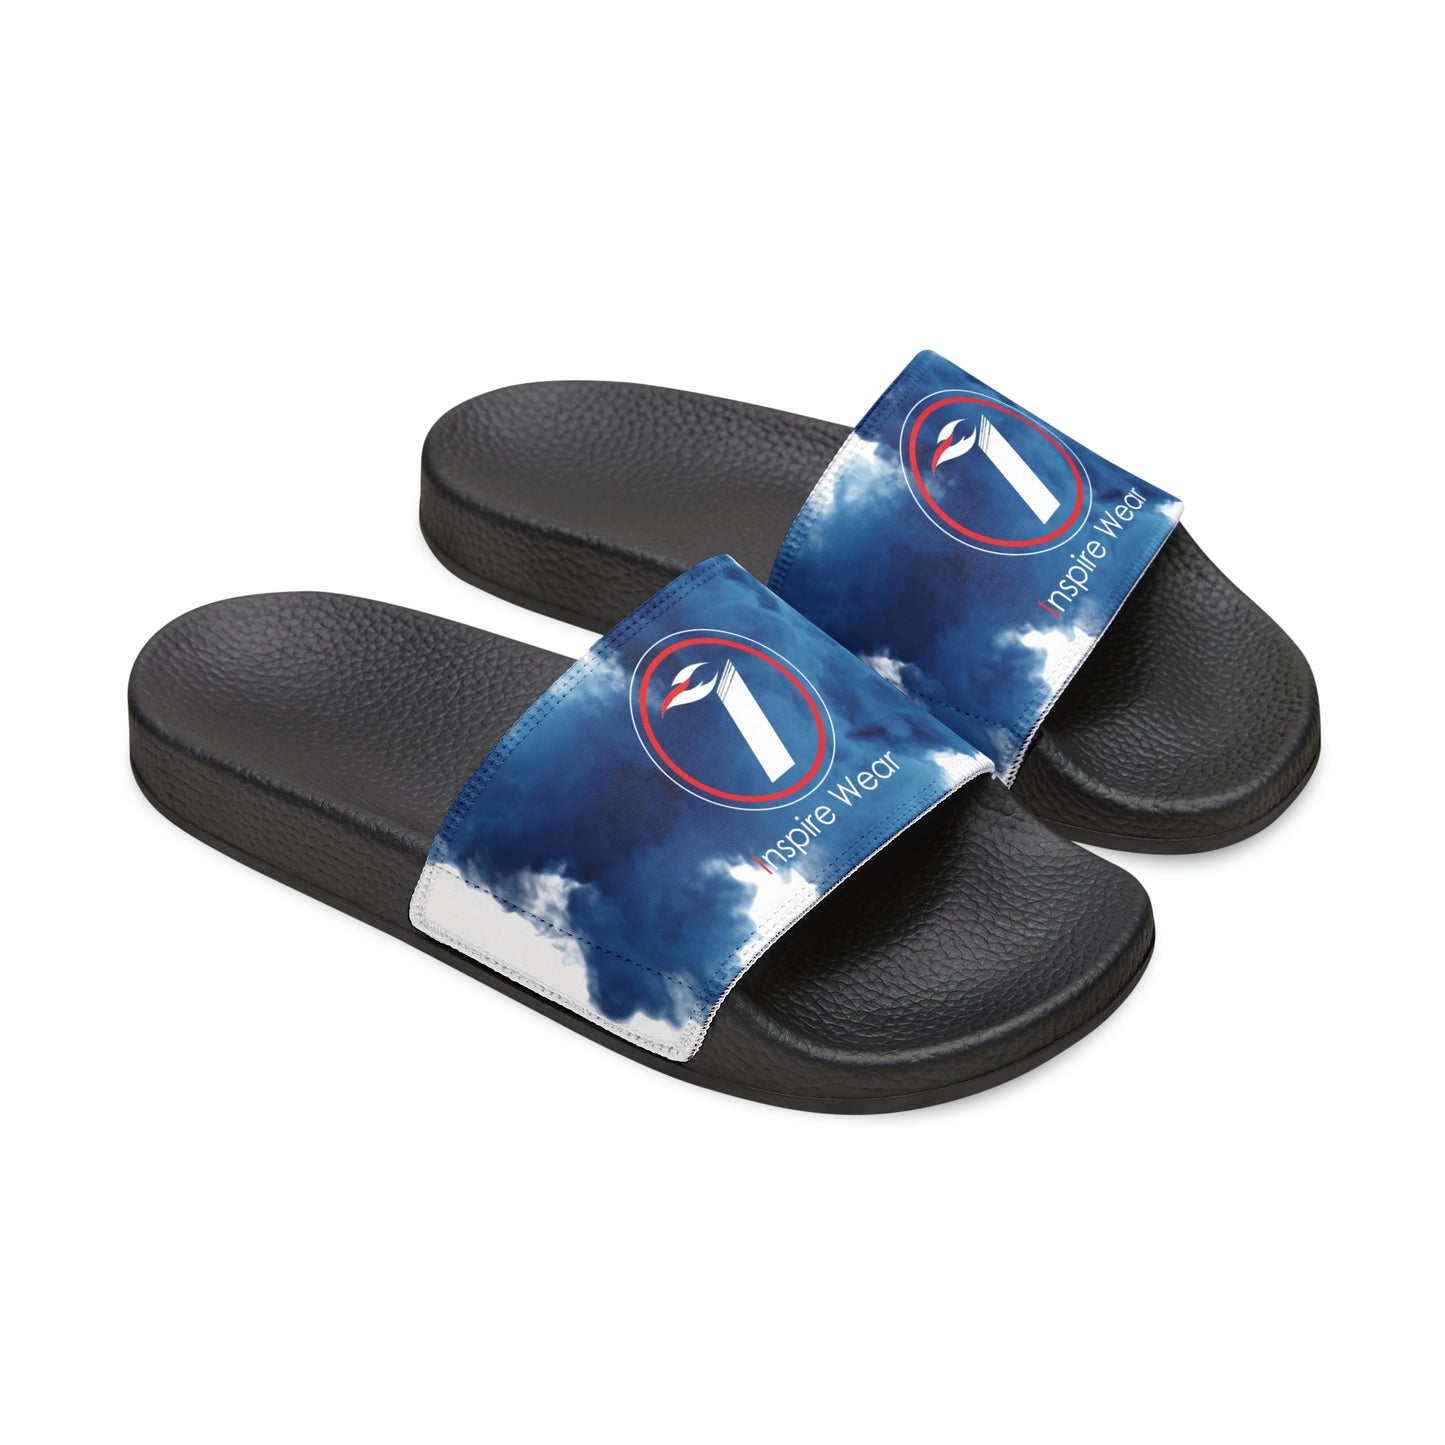 Inspire Wear Men's PU Slide Sandals